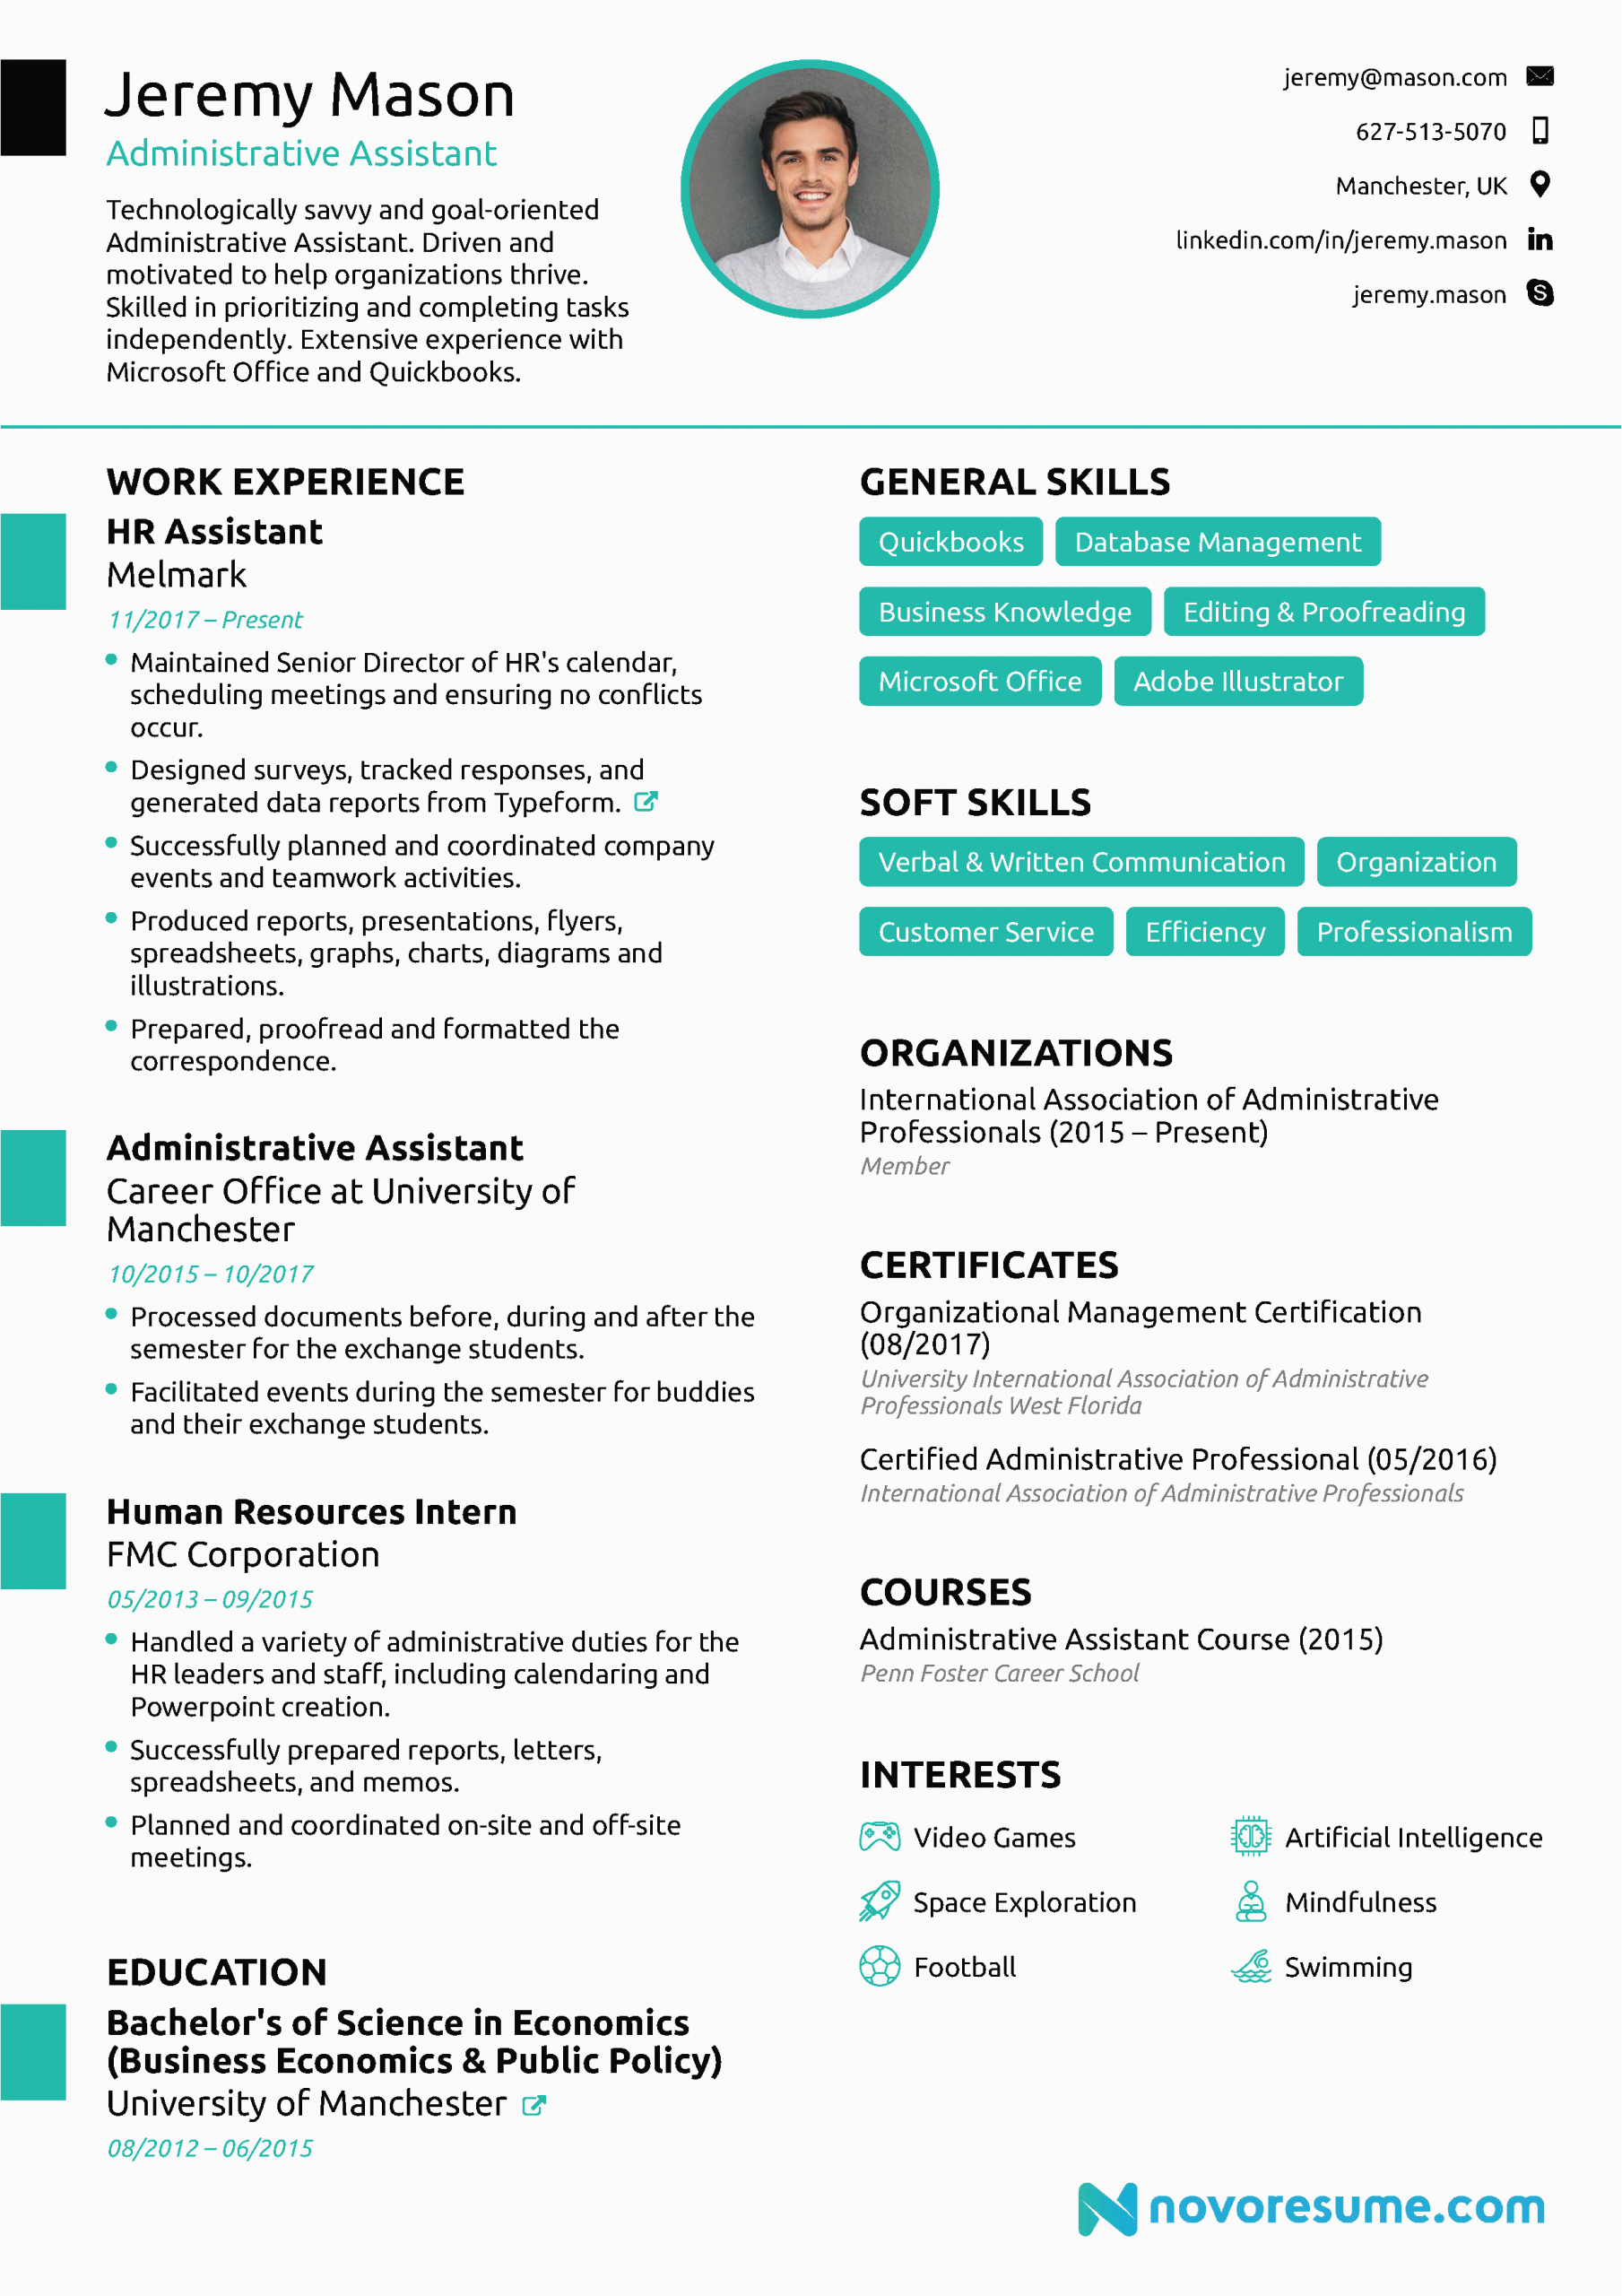 Sample Resume Profile for Administrative assistant Administrative assistant Resume [2021] Guide & Examples